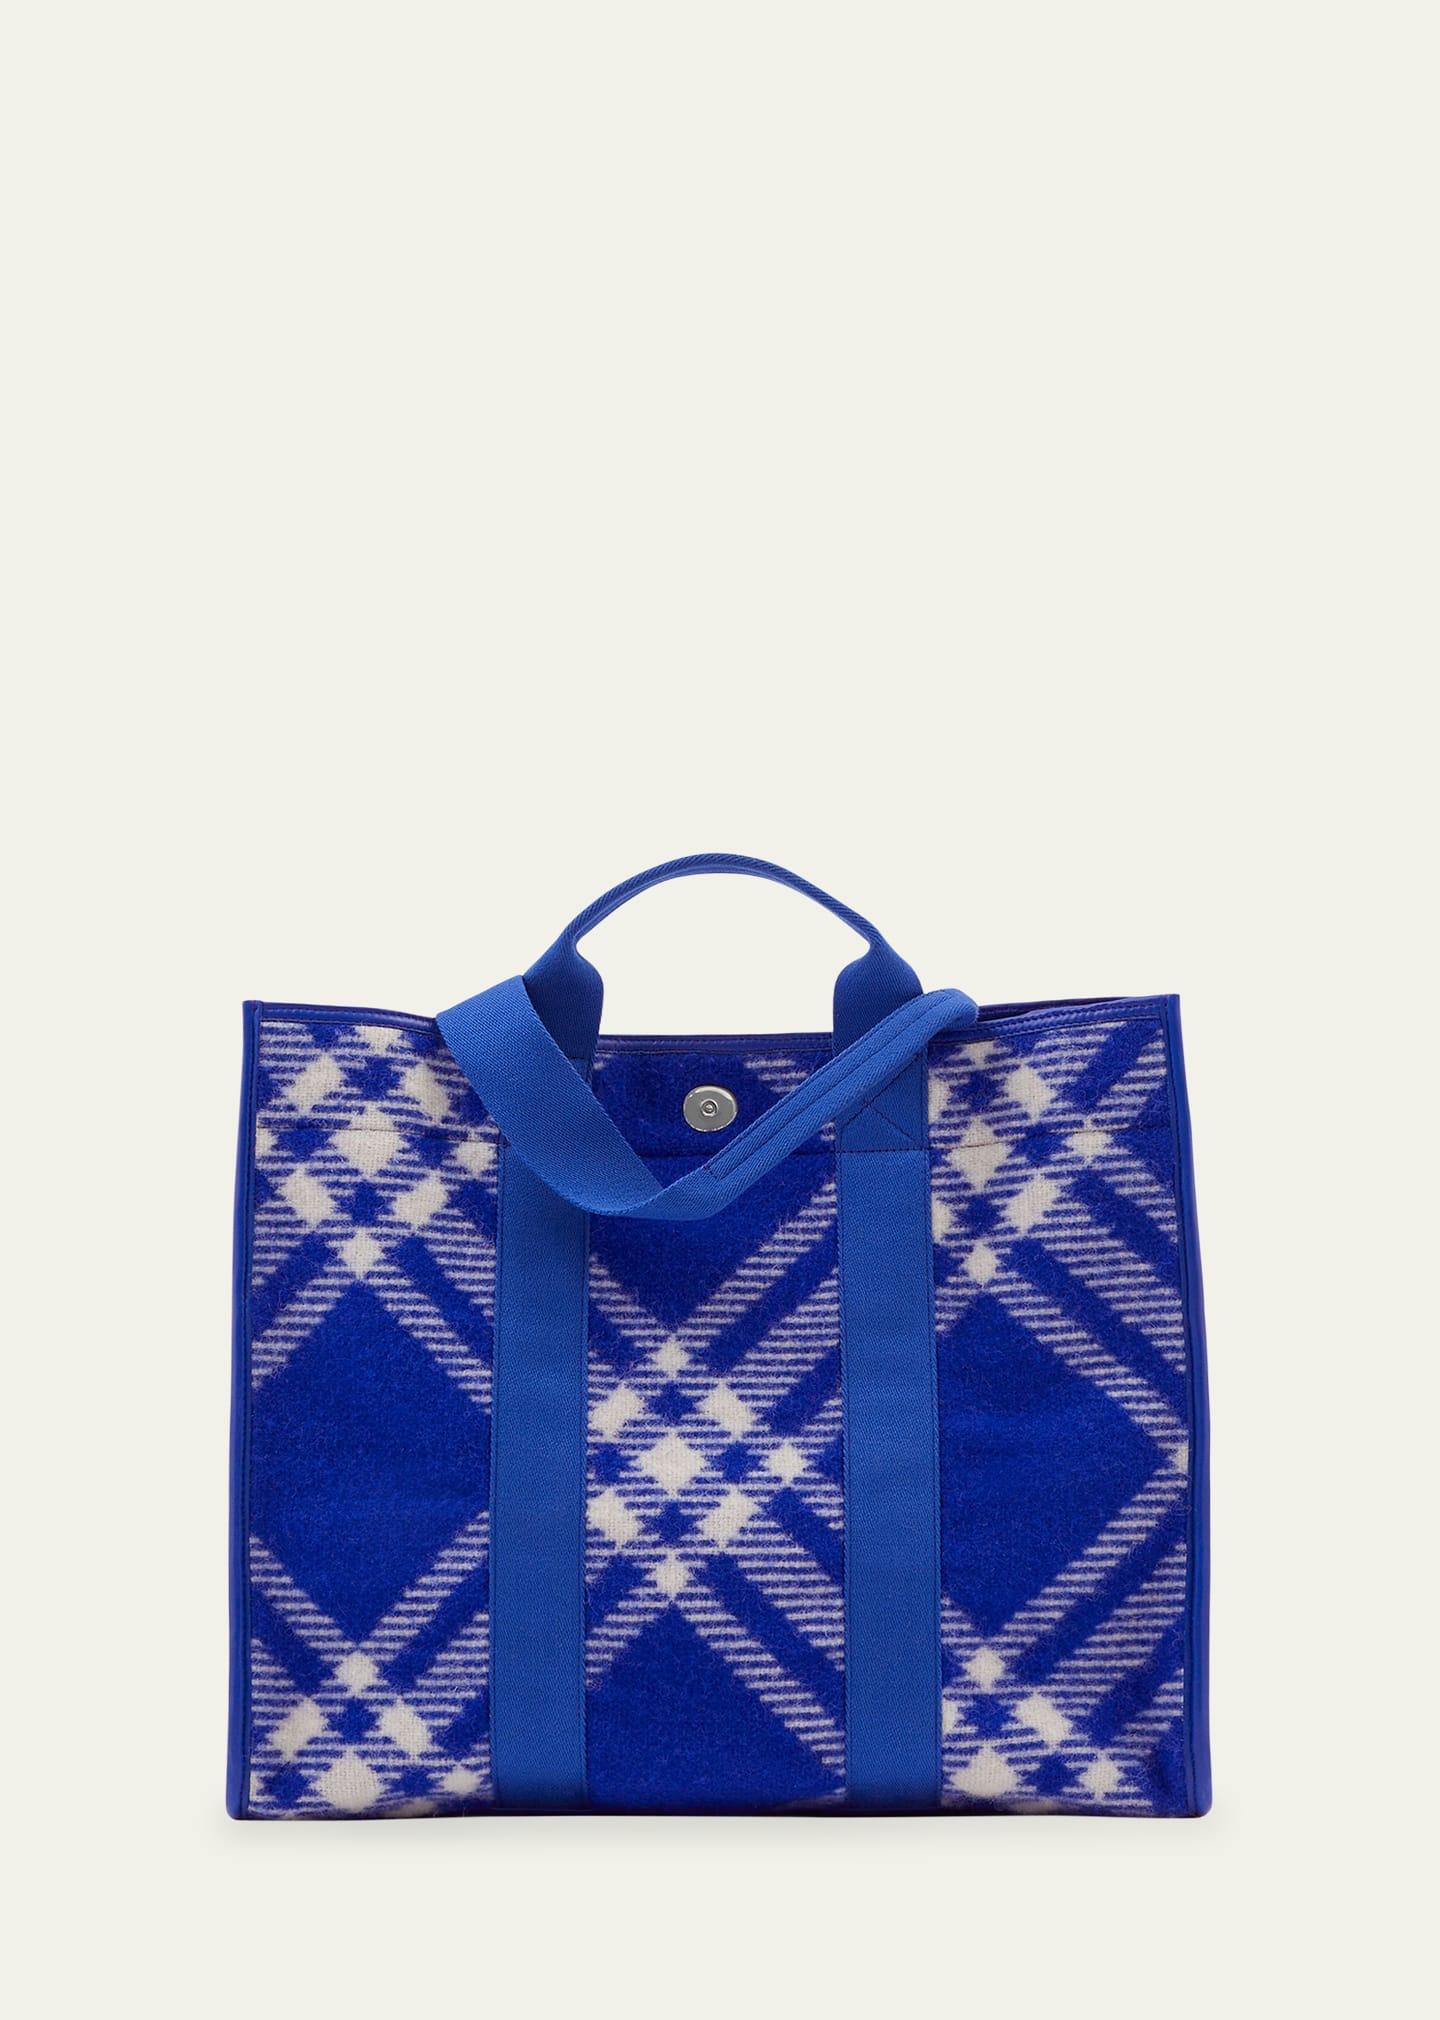 Neiman Marcus Blue Faux Leather Shopper Tote Bag